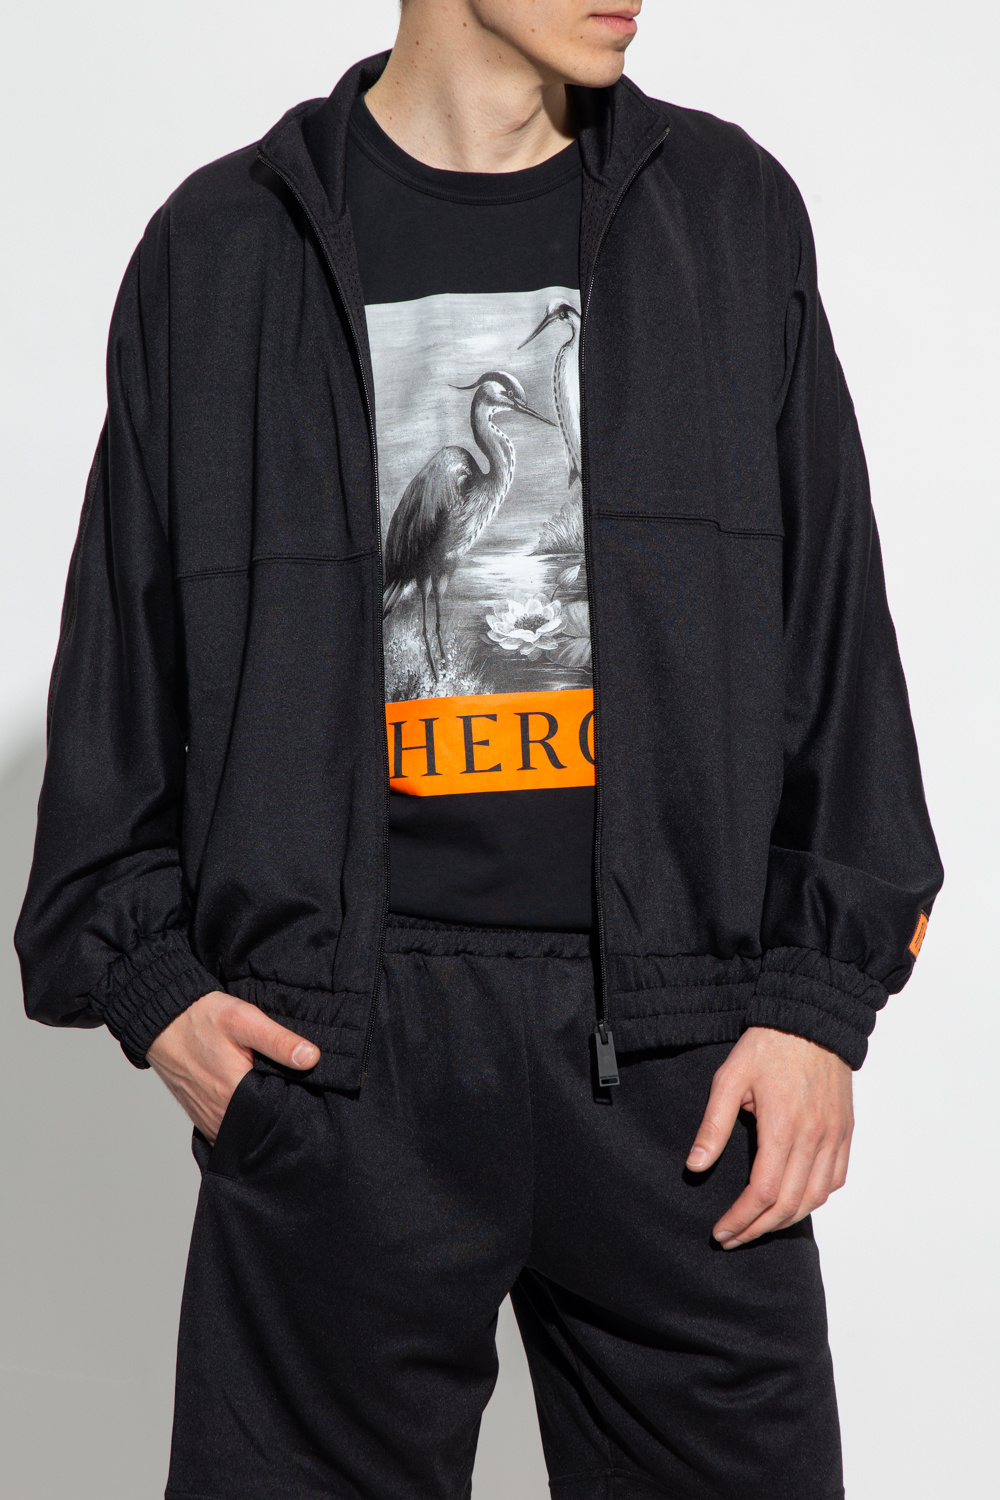 Heron Preston T-Shirt d9m3s3850 700